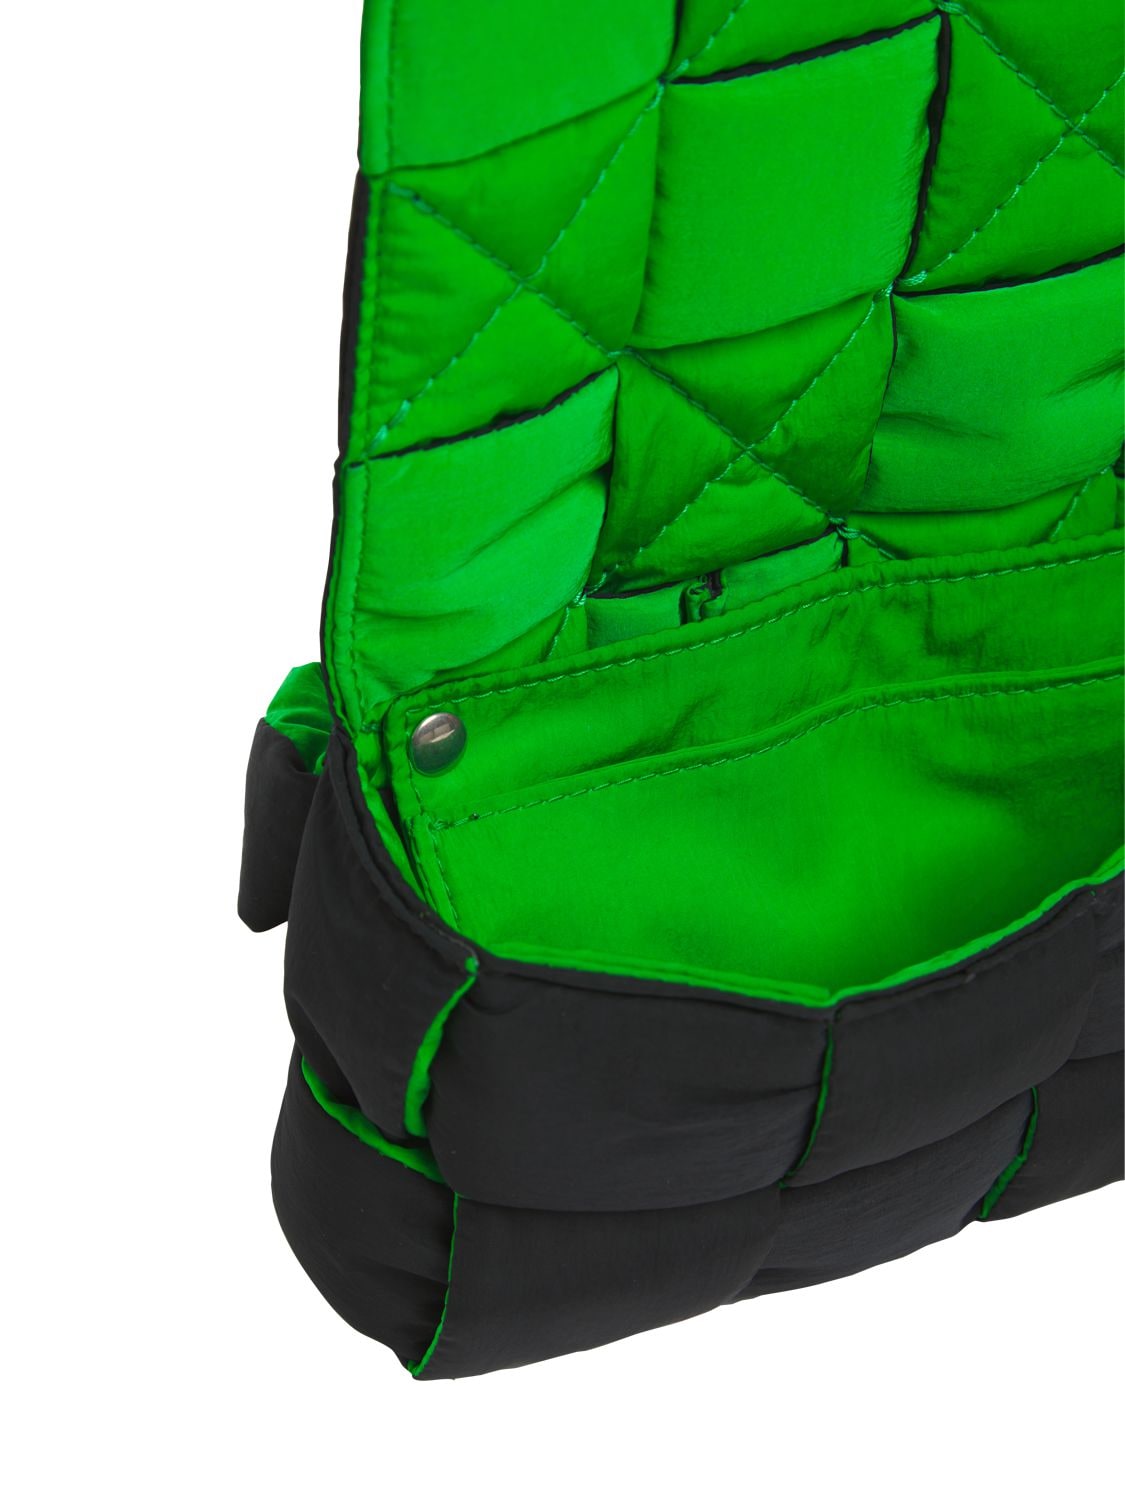 Shop Bottega Veneta Tech Crossbody Bag W/ Contrast Lining In Black,parakeet